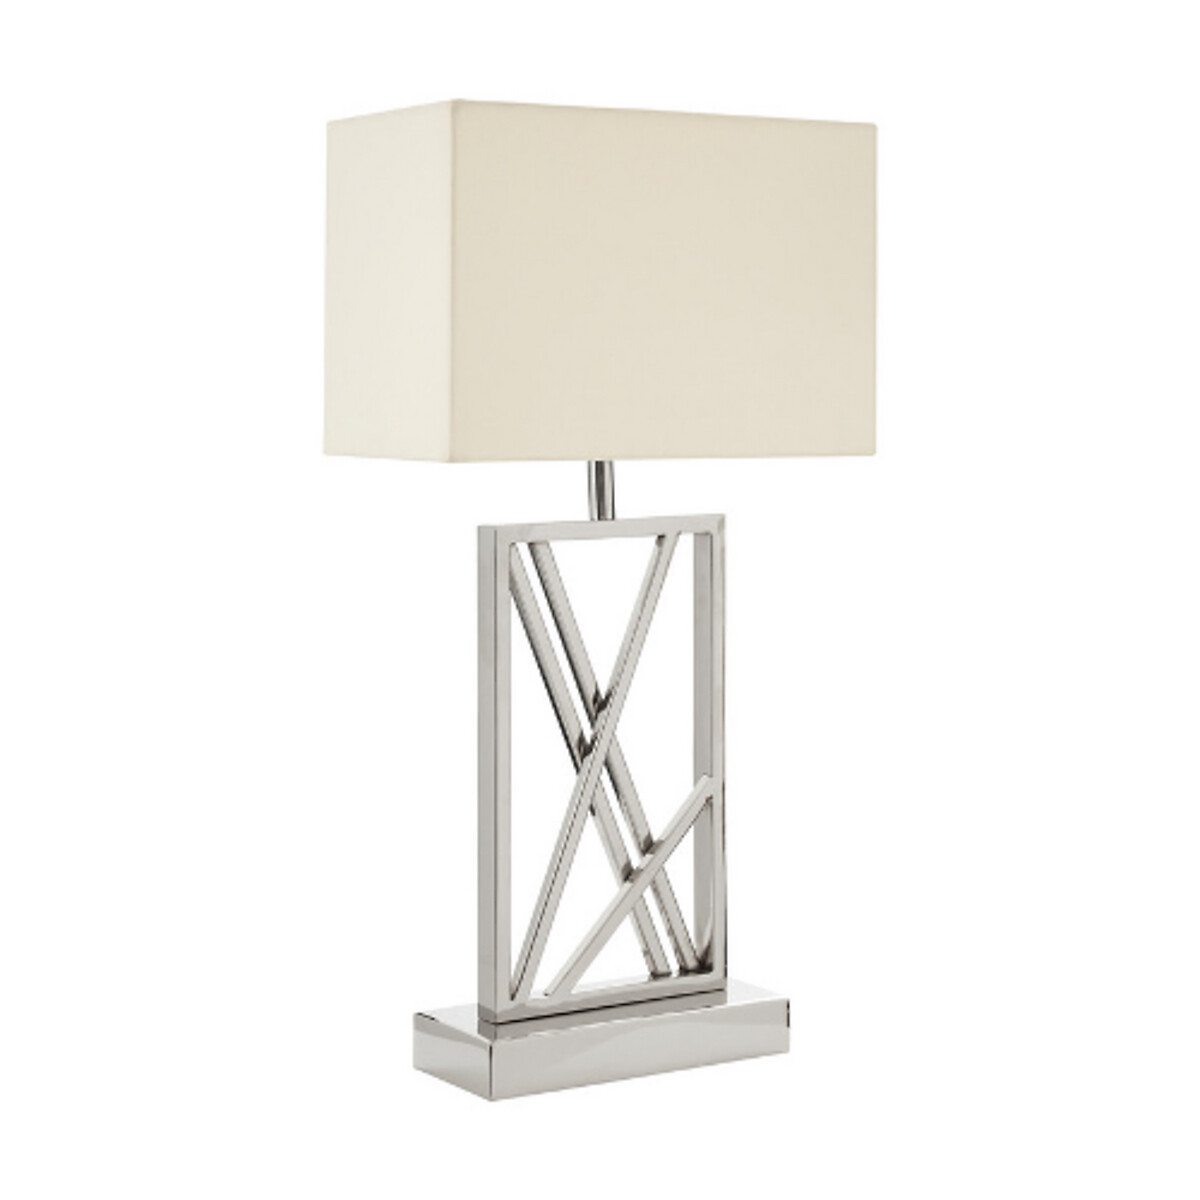 Stainless Steel Abstract Rectangular, White Rectangular Tapered Table Lamp Shade 35cm